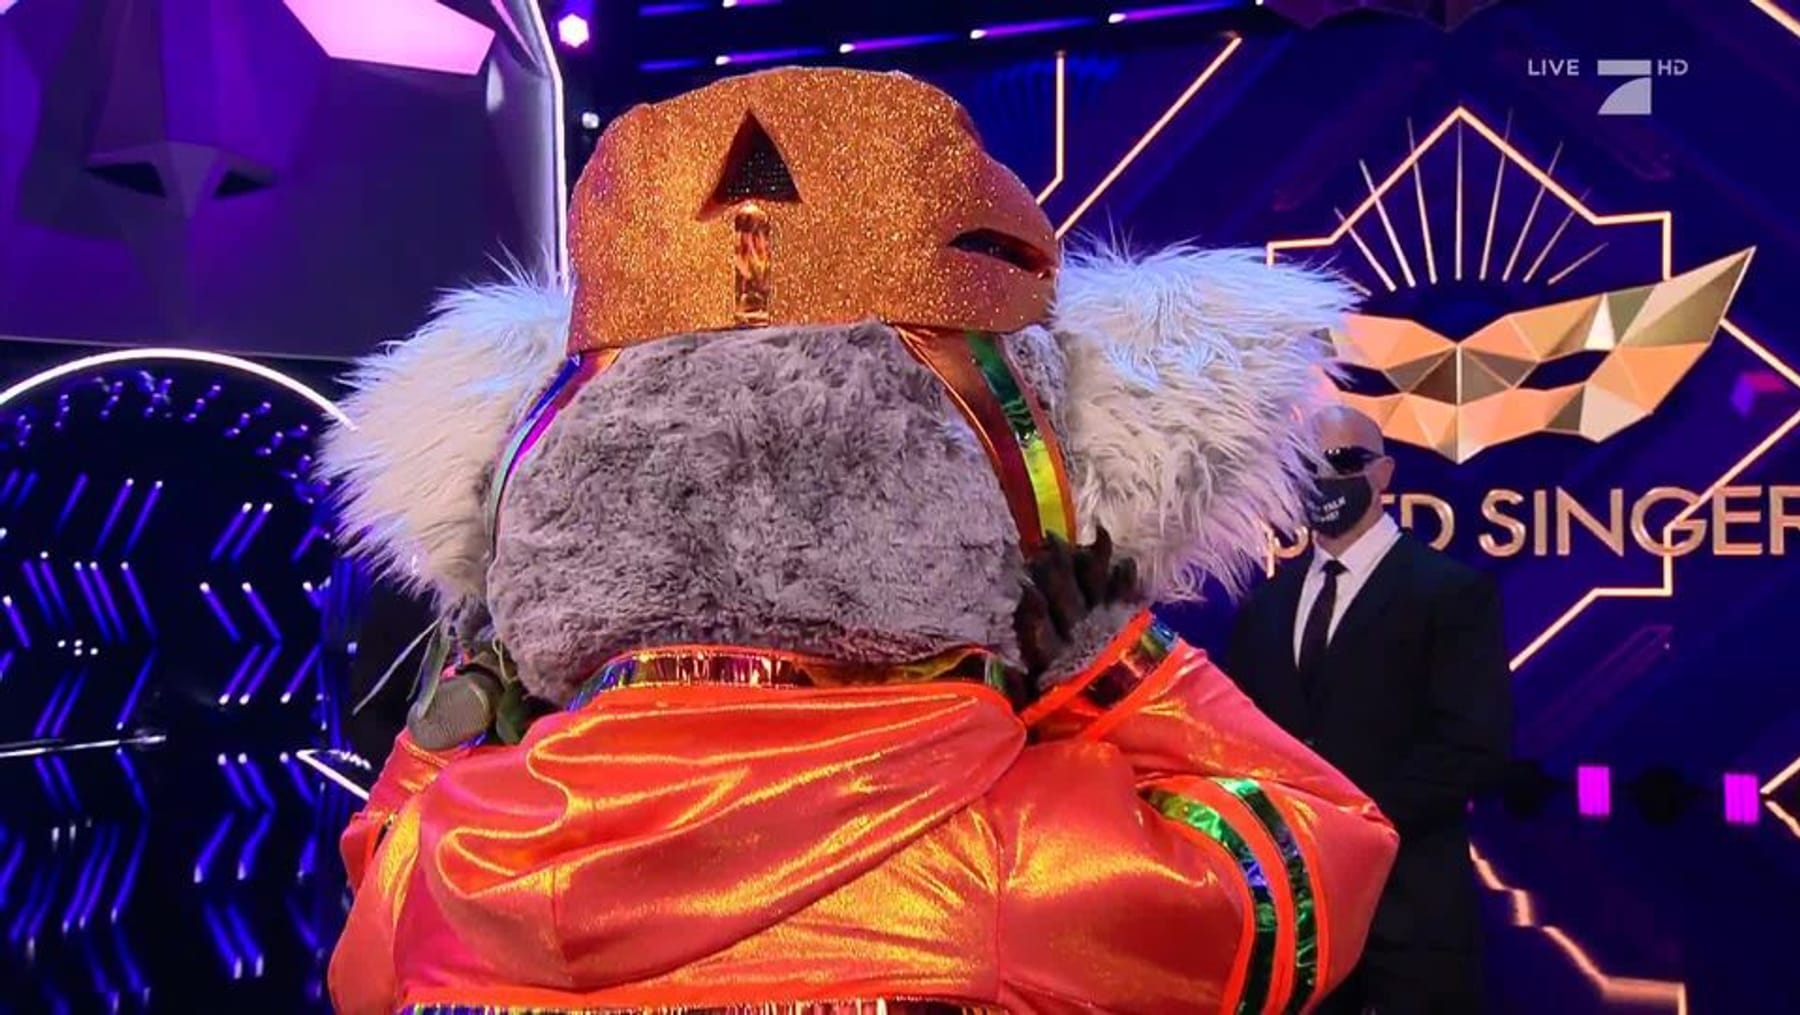 "The Masked Singer" 2022 Koala enttarnt Weltstar Paul Potts mit dabei